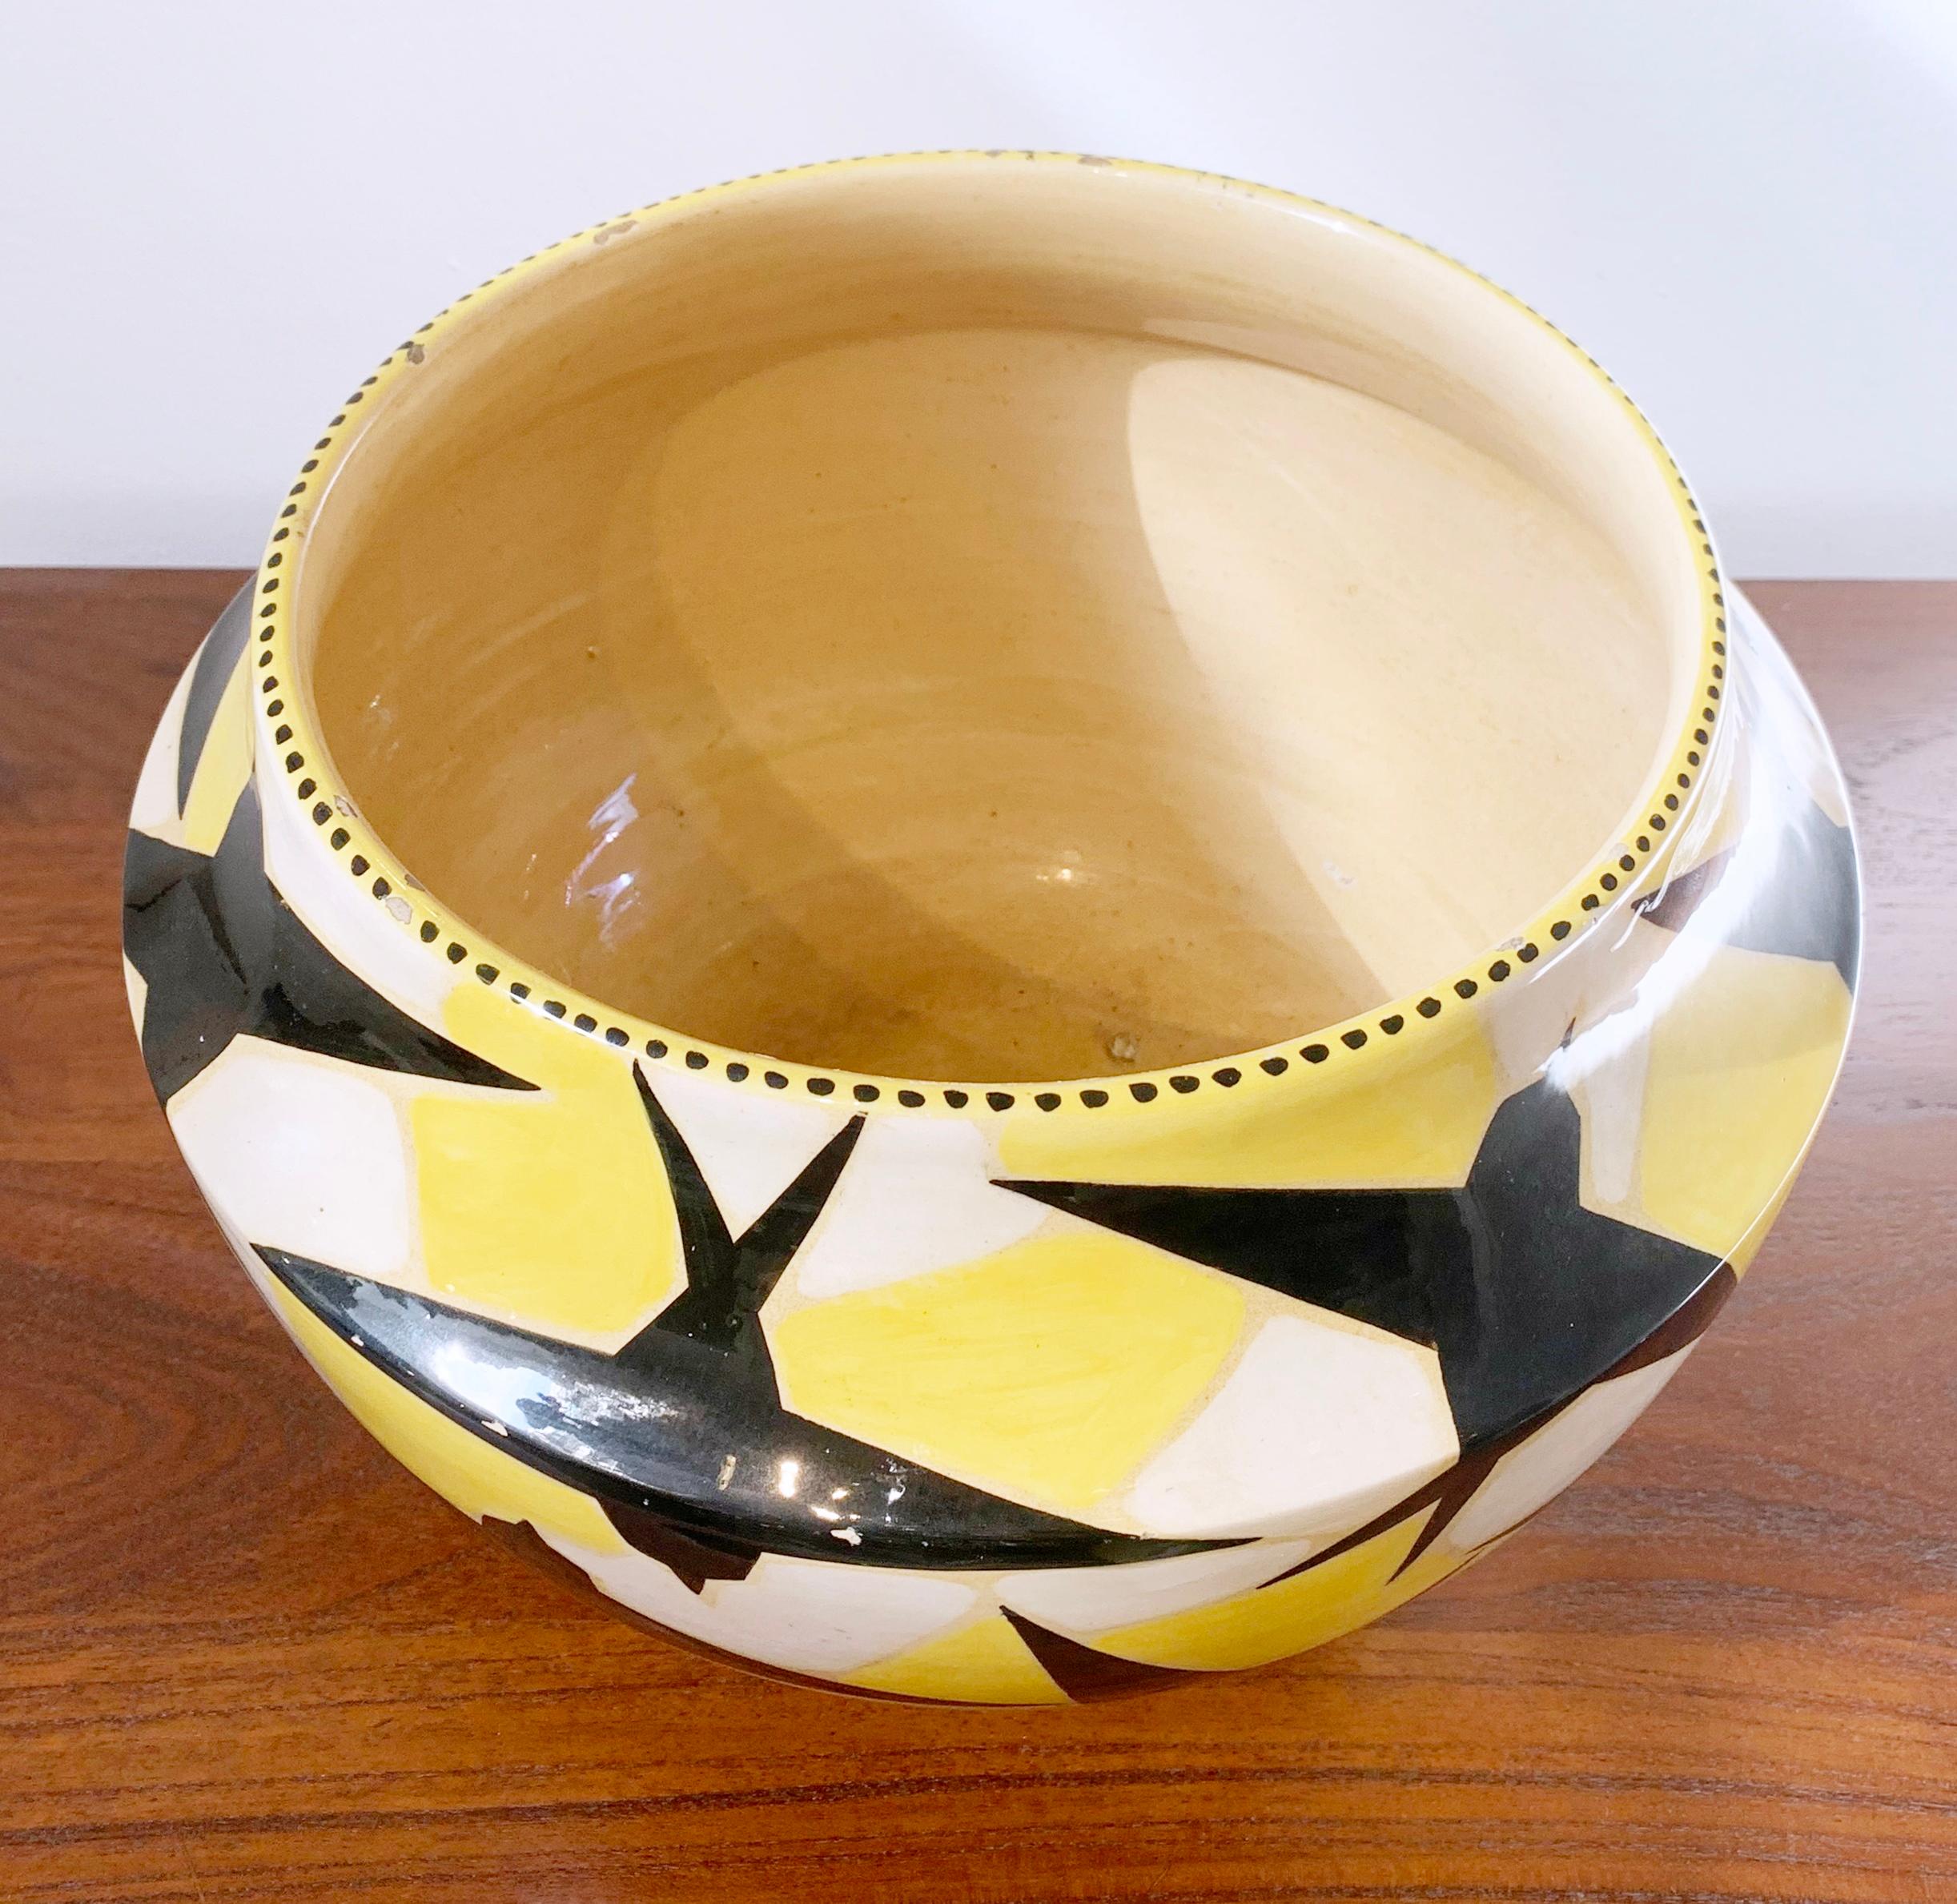 Keramikvase signiert von Fenice Albisola für Manlio Trucco - Italien 1930.